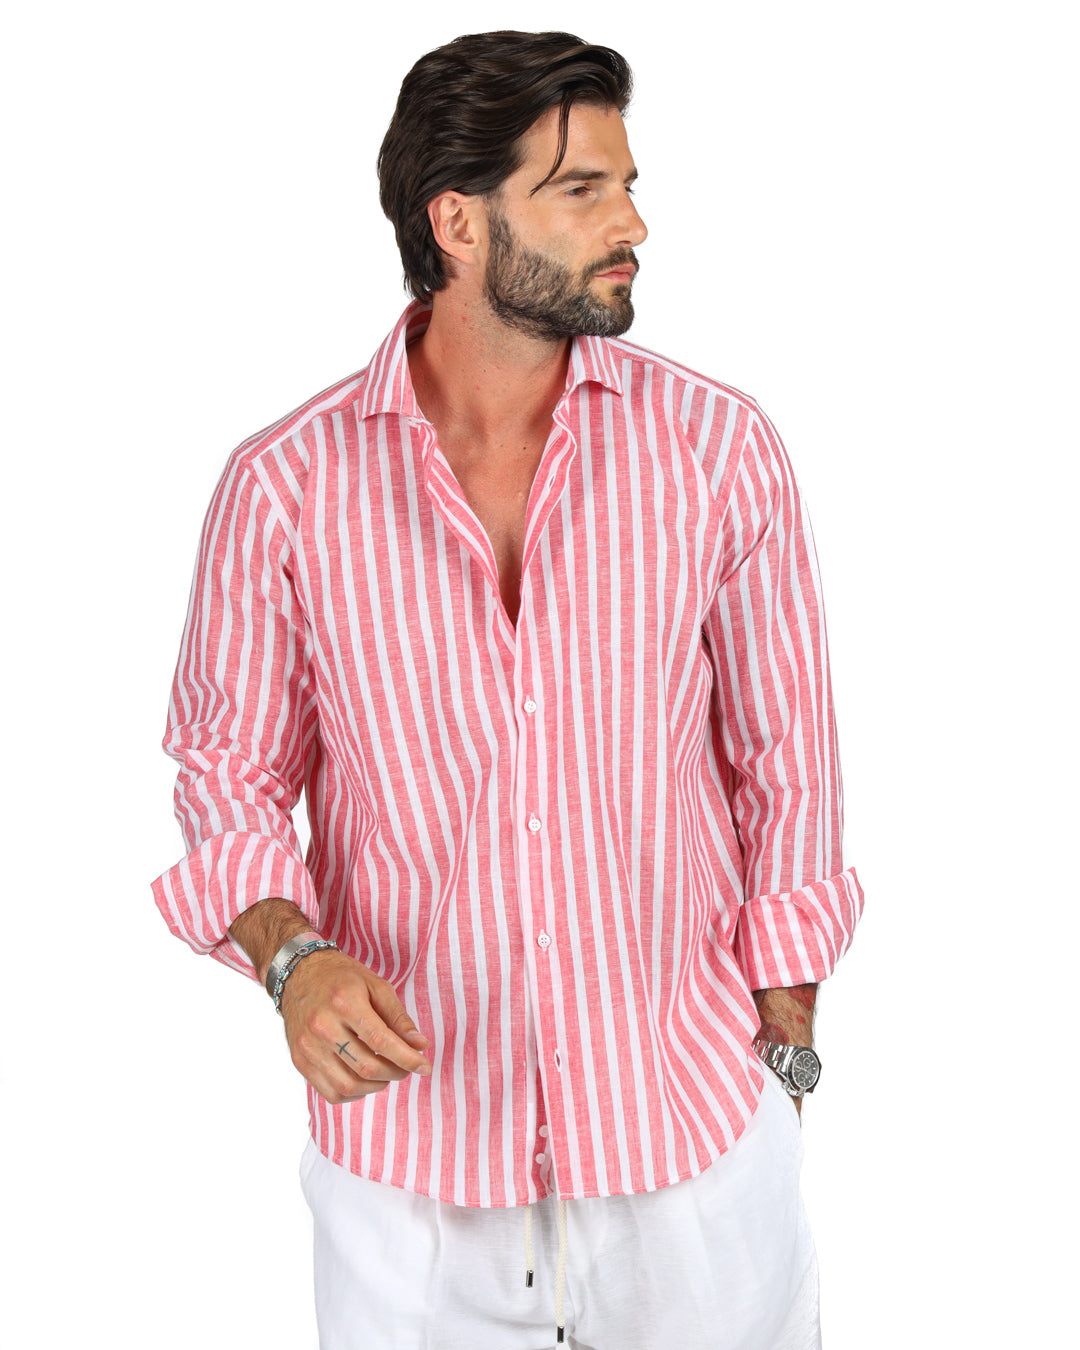 Procida - Classic red wide striped linen shirt